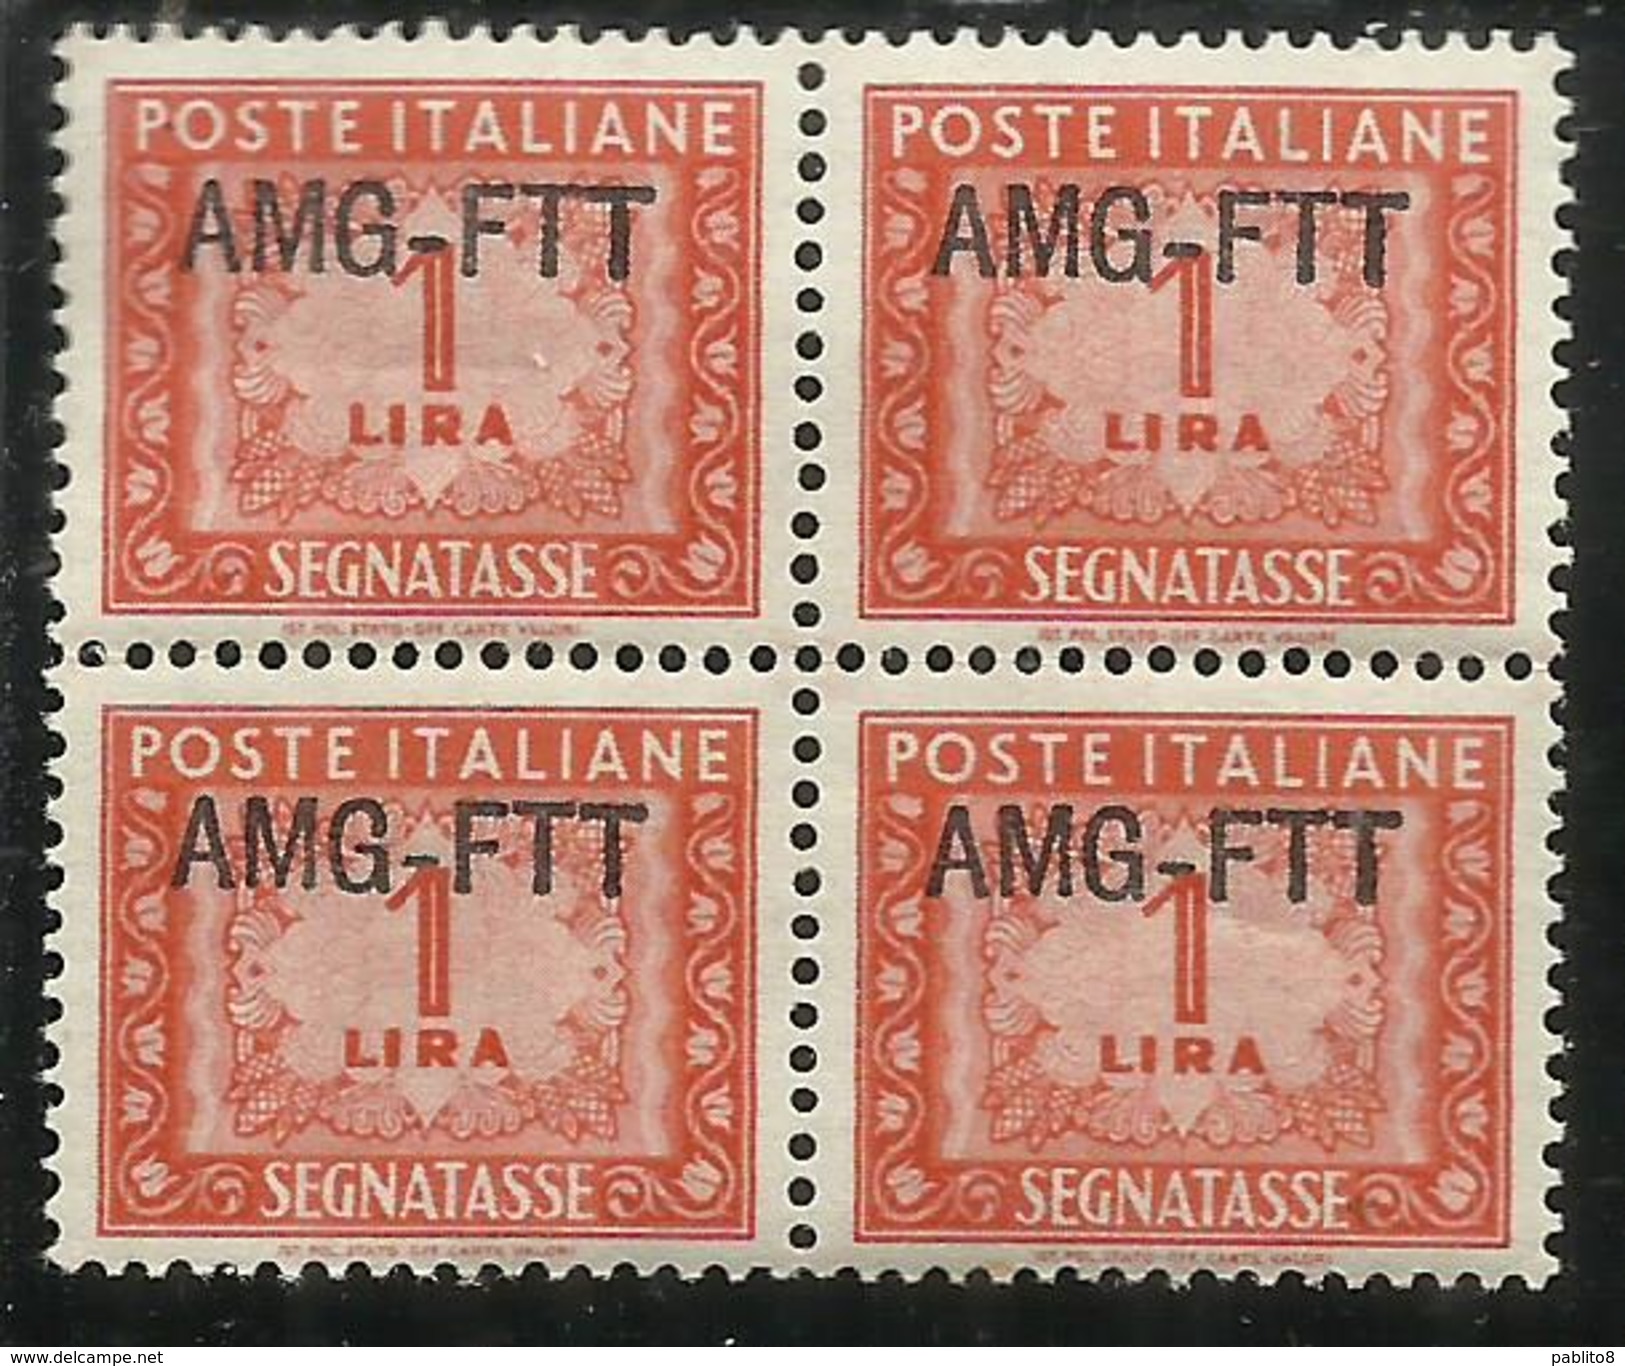 TRIESTE A 1949 1954 AMG-FTT SOPRASTAMPATO D´ITALIA ITALY OVERPRINTED SEGNATASSE POSTAGE DUE TAXES TASSE LIRE 1 MNH - Strafport